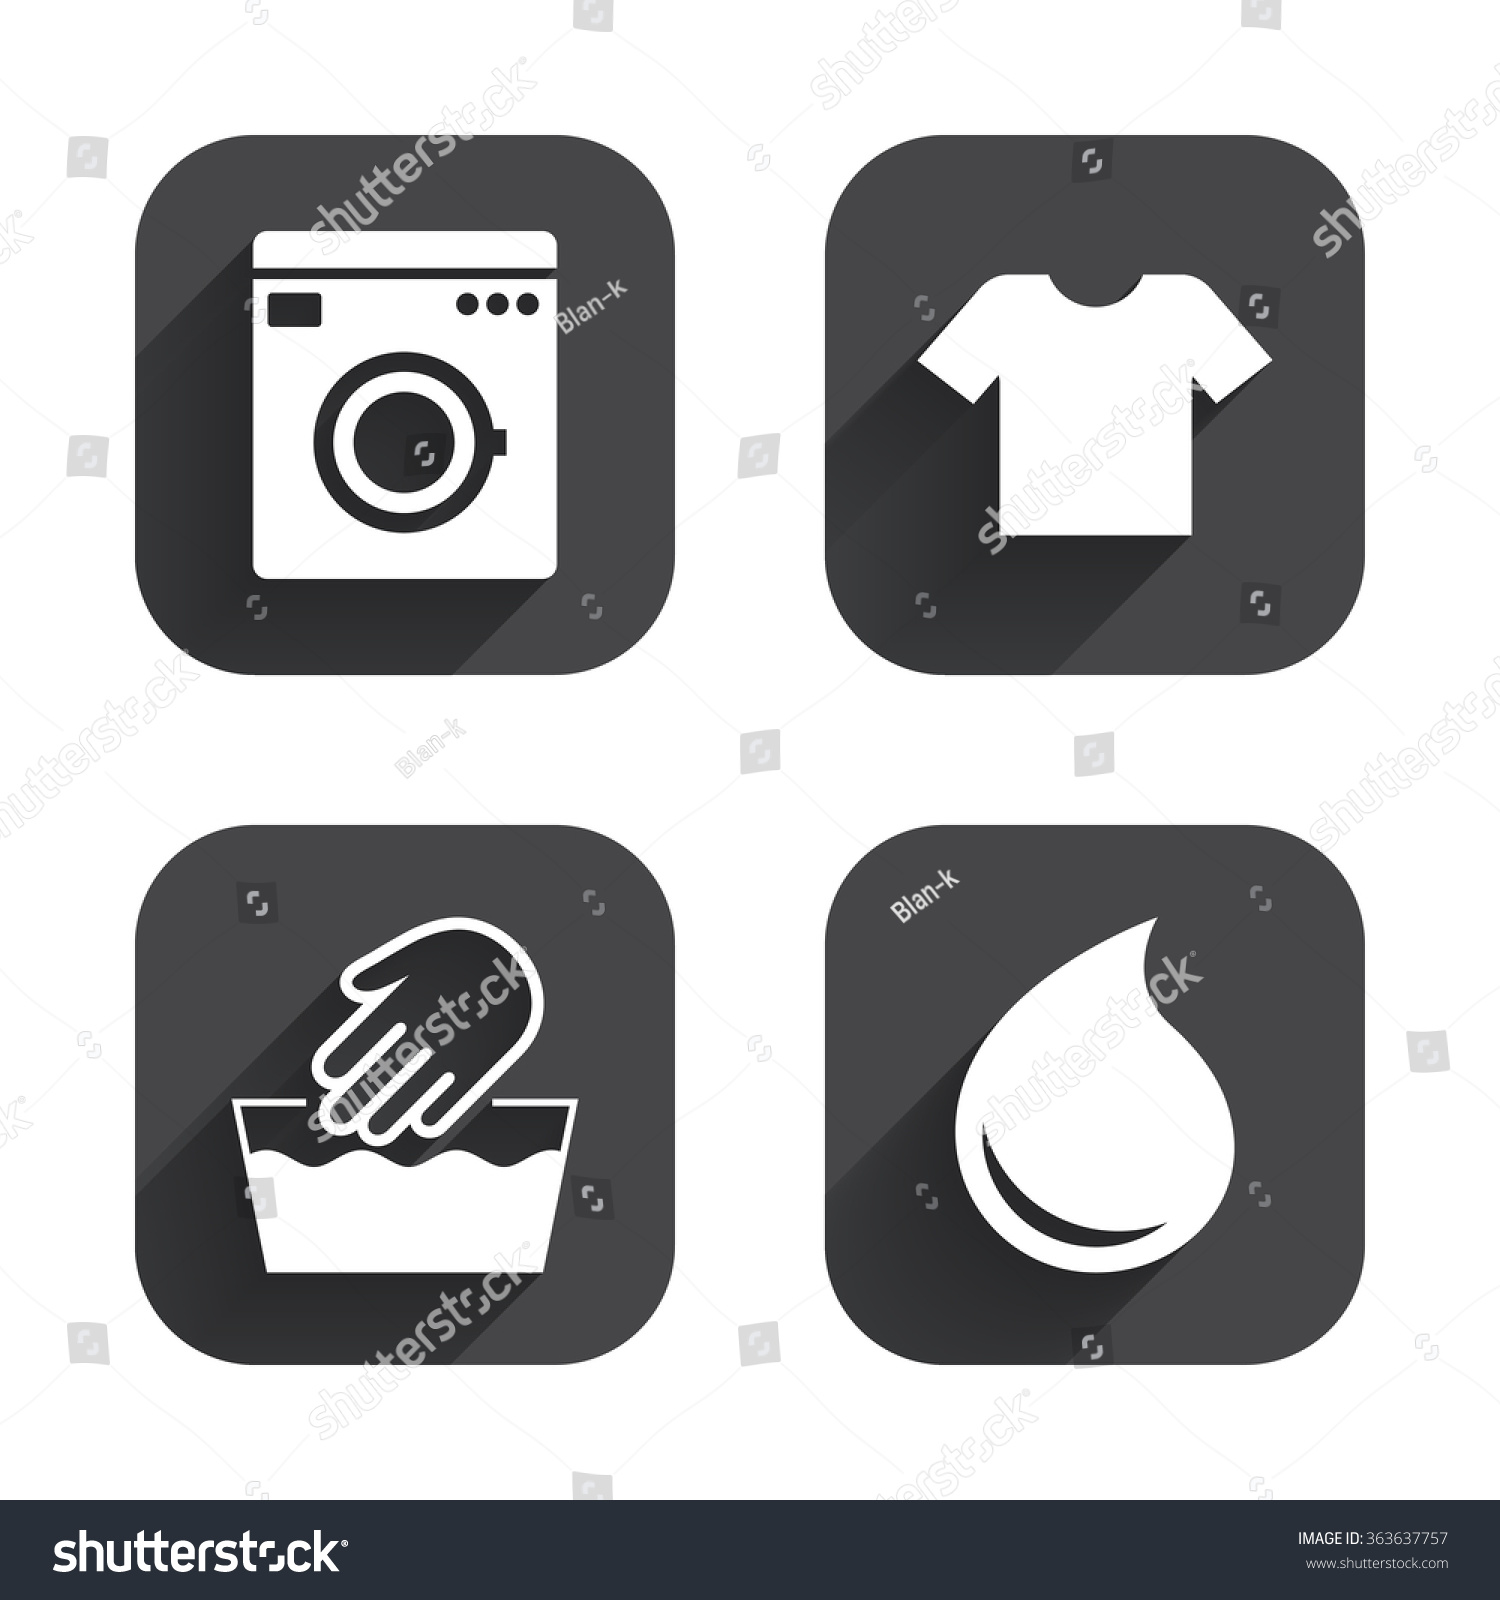 Wash Machine Icon Hand Wash Tshirt Stock Illustration 363637757 ...